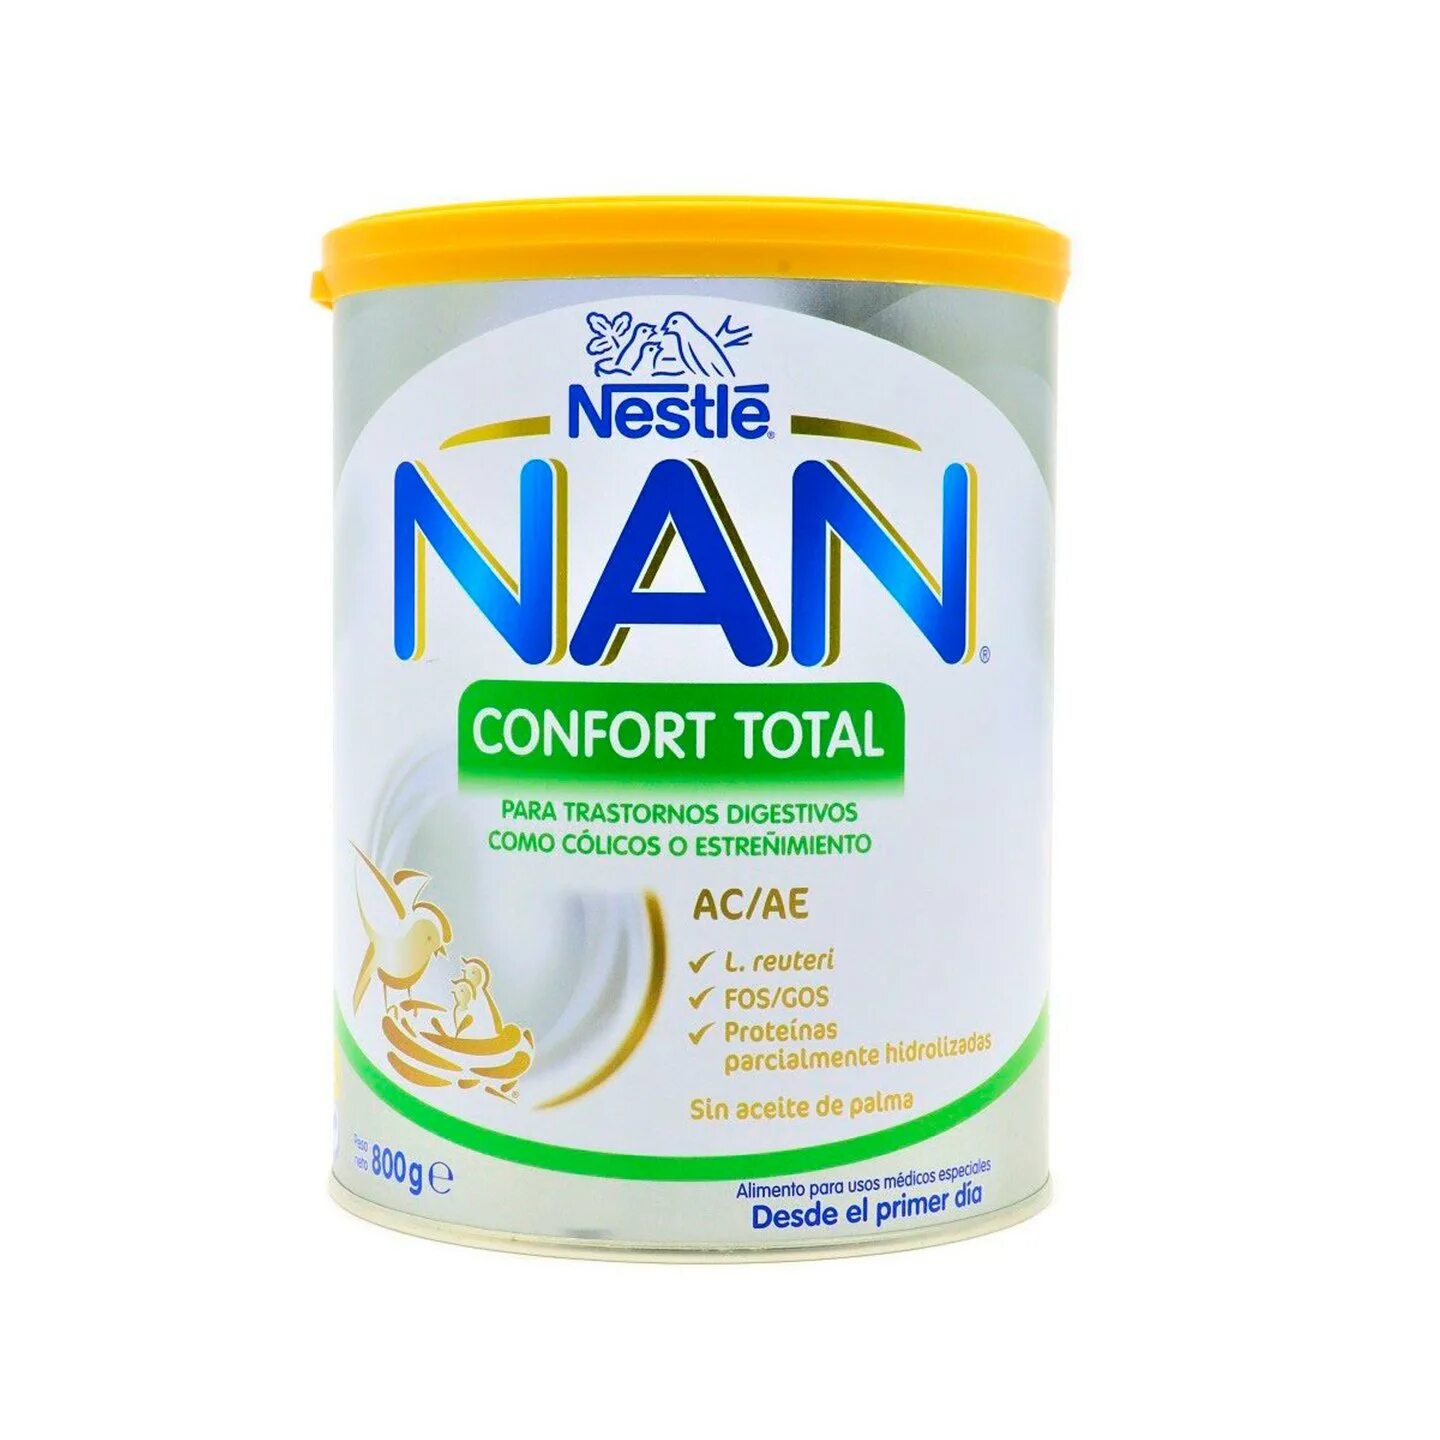 Нан эксперт про купить. Nan total Comfort. Нан тройной комфорт 800 гр. Nestle nan Comfort. Nan Expert Pro тройной комфорт.